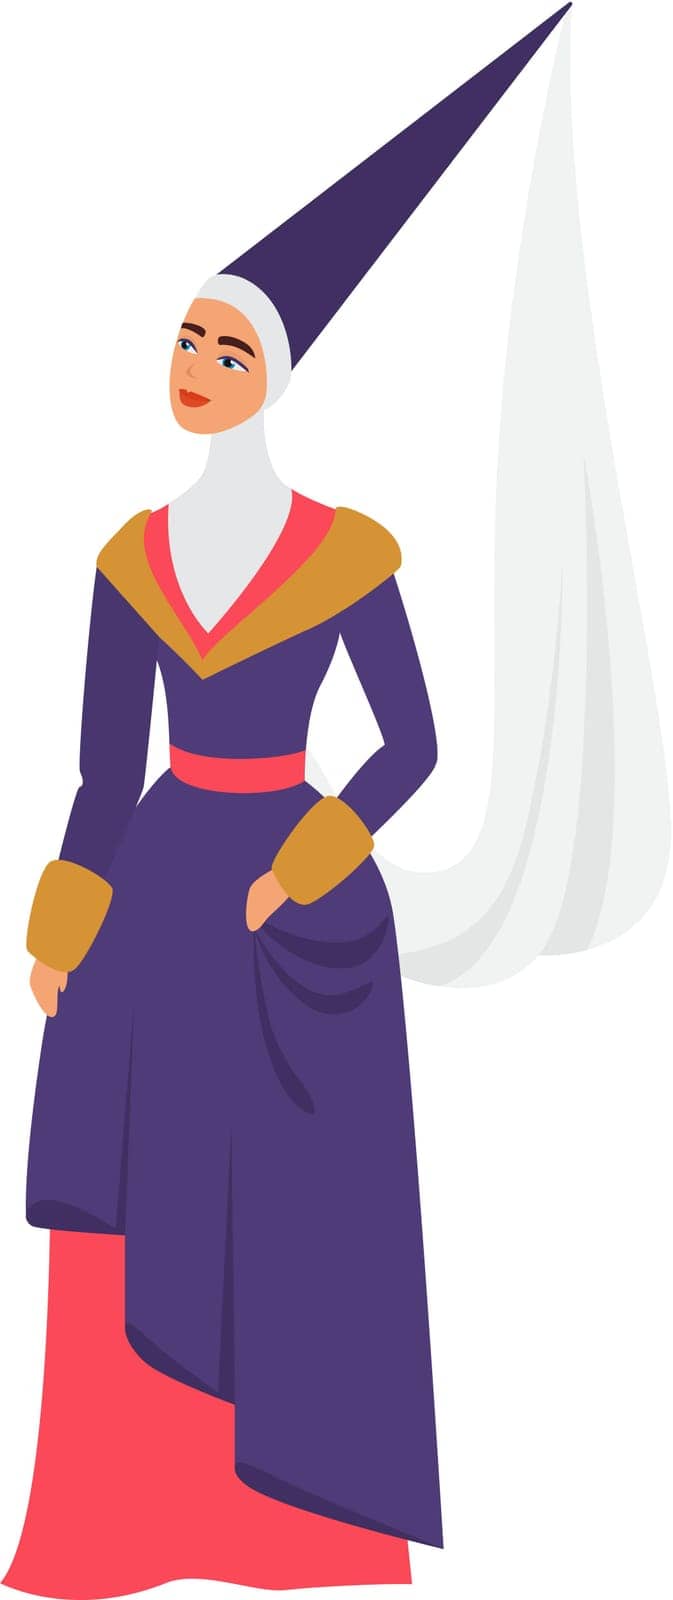 Medieval fashion princess by Lembergvector